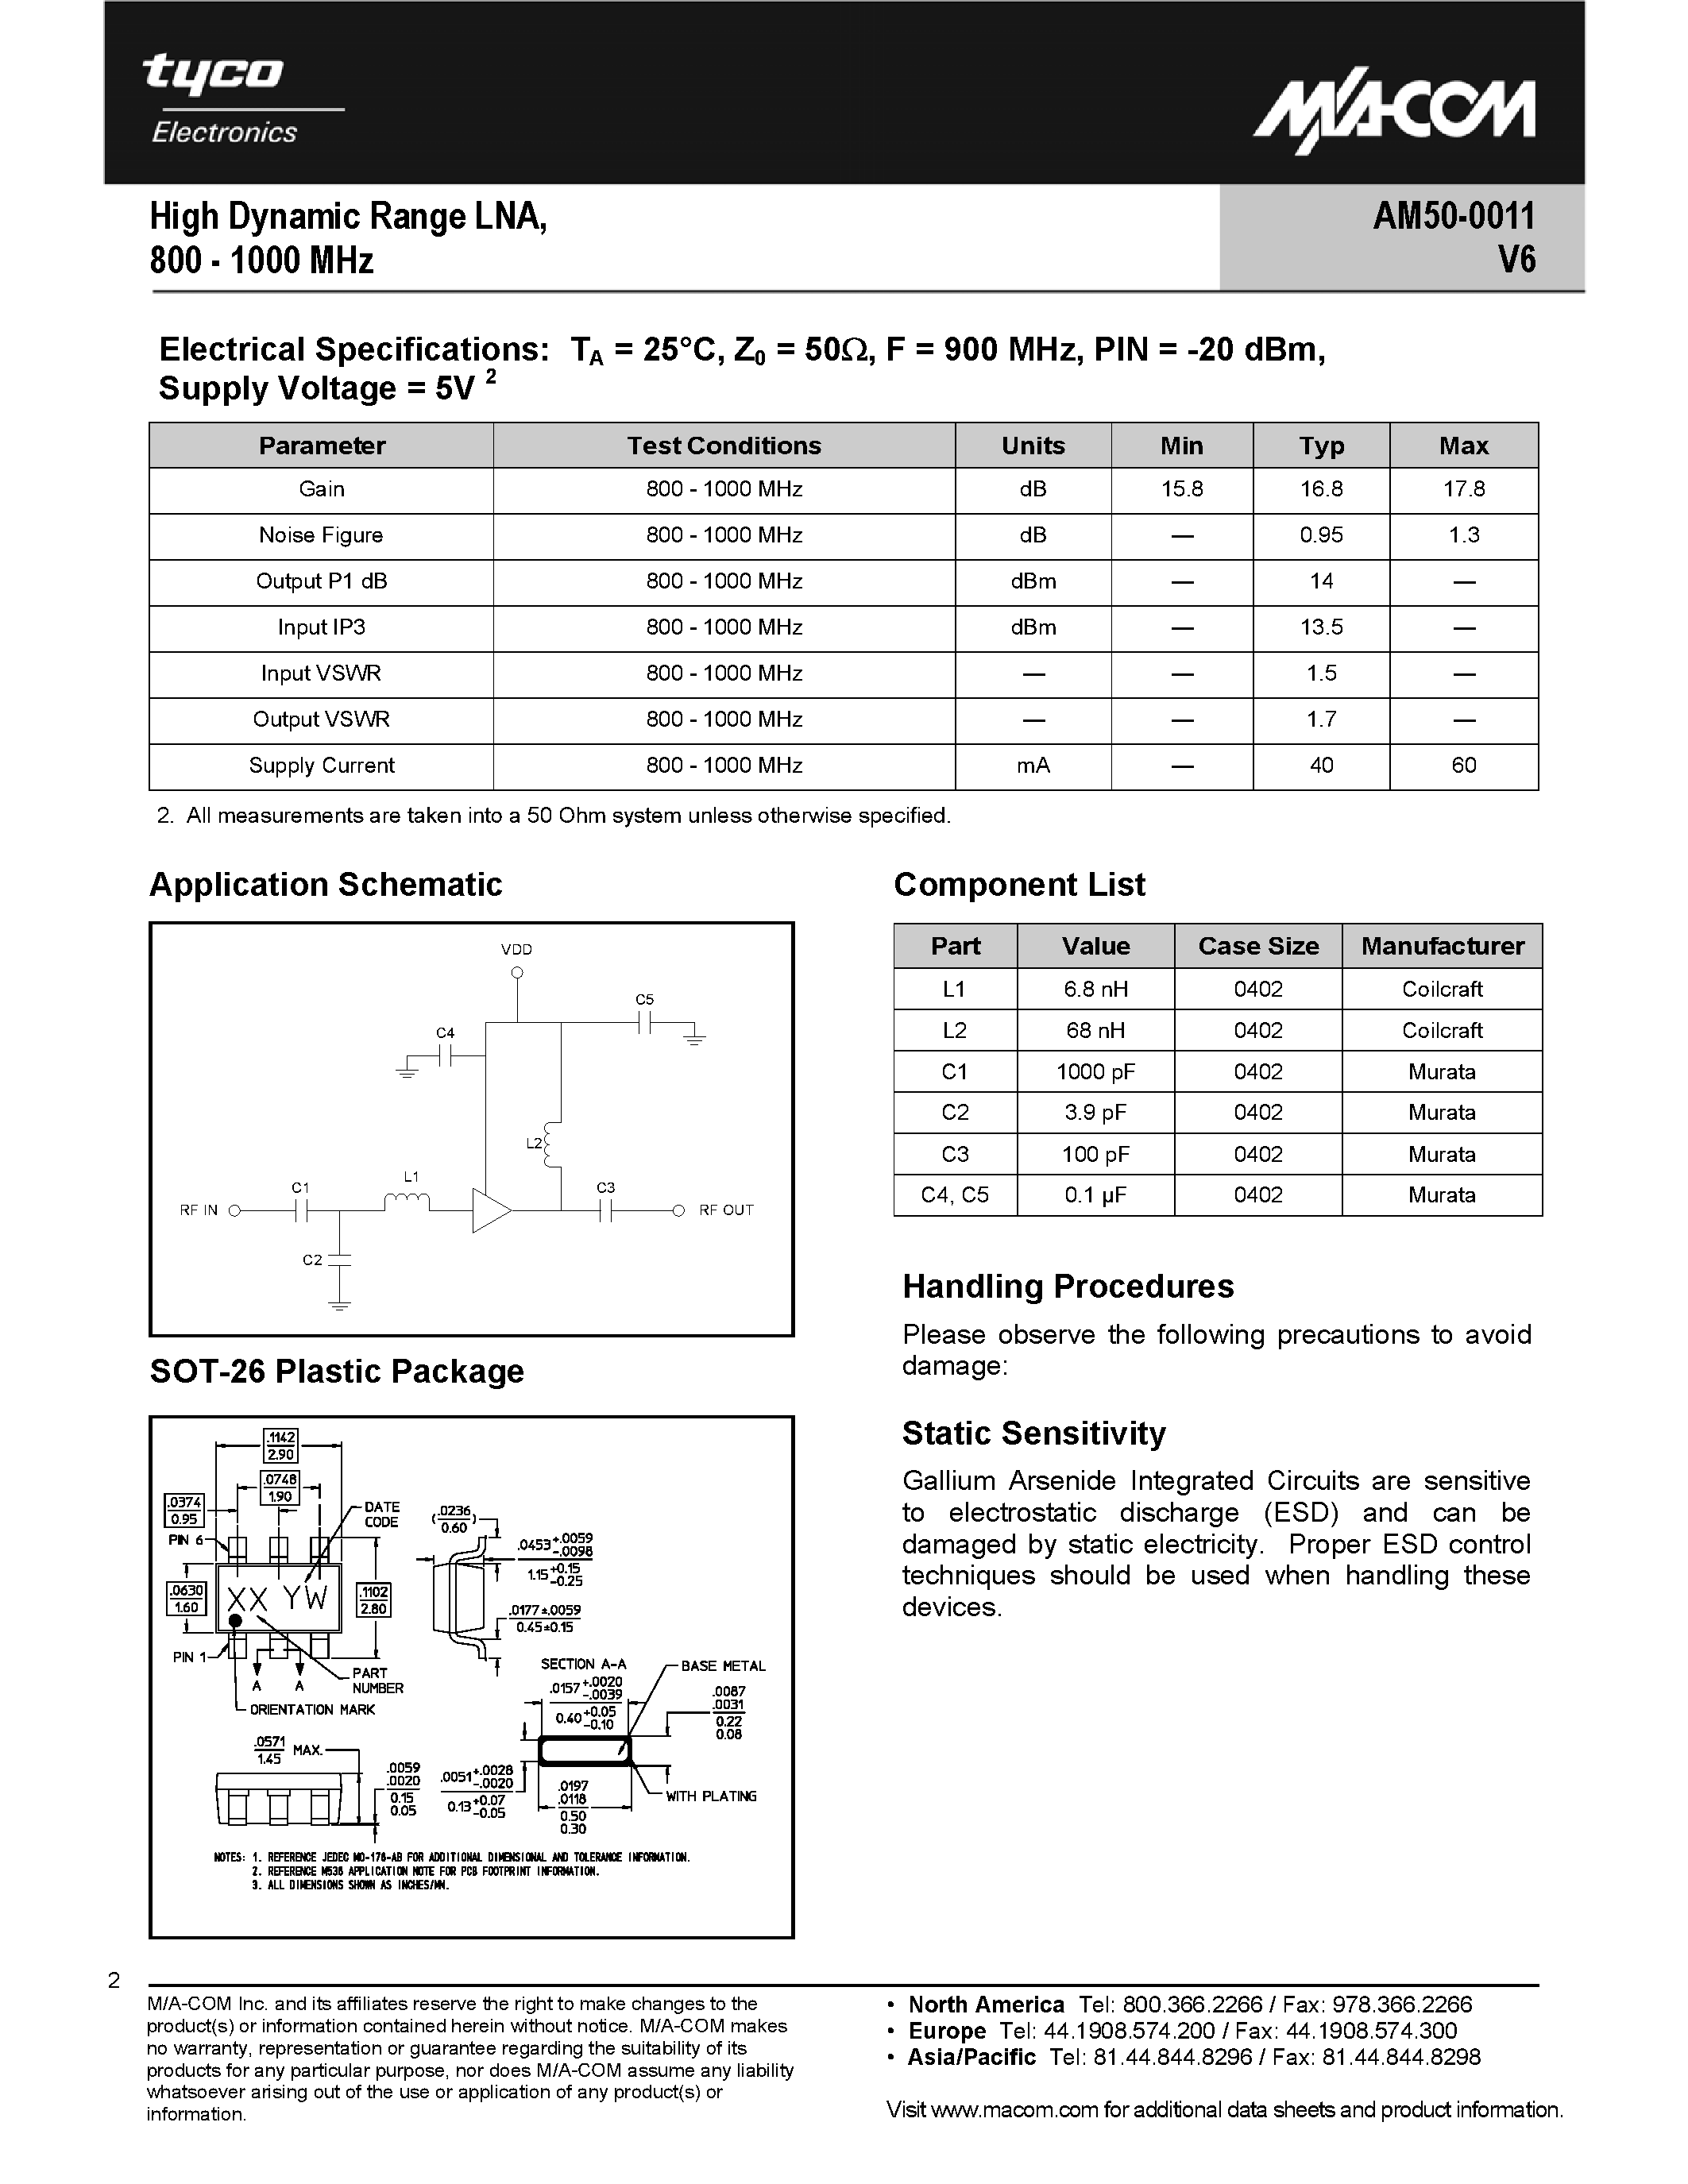 Datasheet AM50-0011V6 - High Dynamic Range Low Noise Amplifier page 2